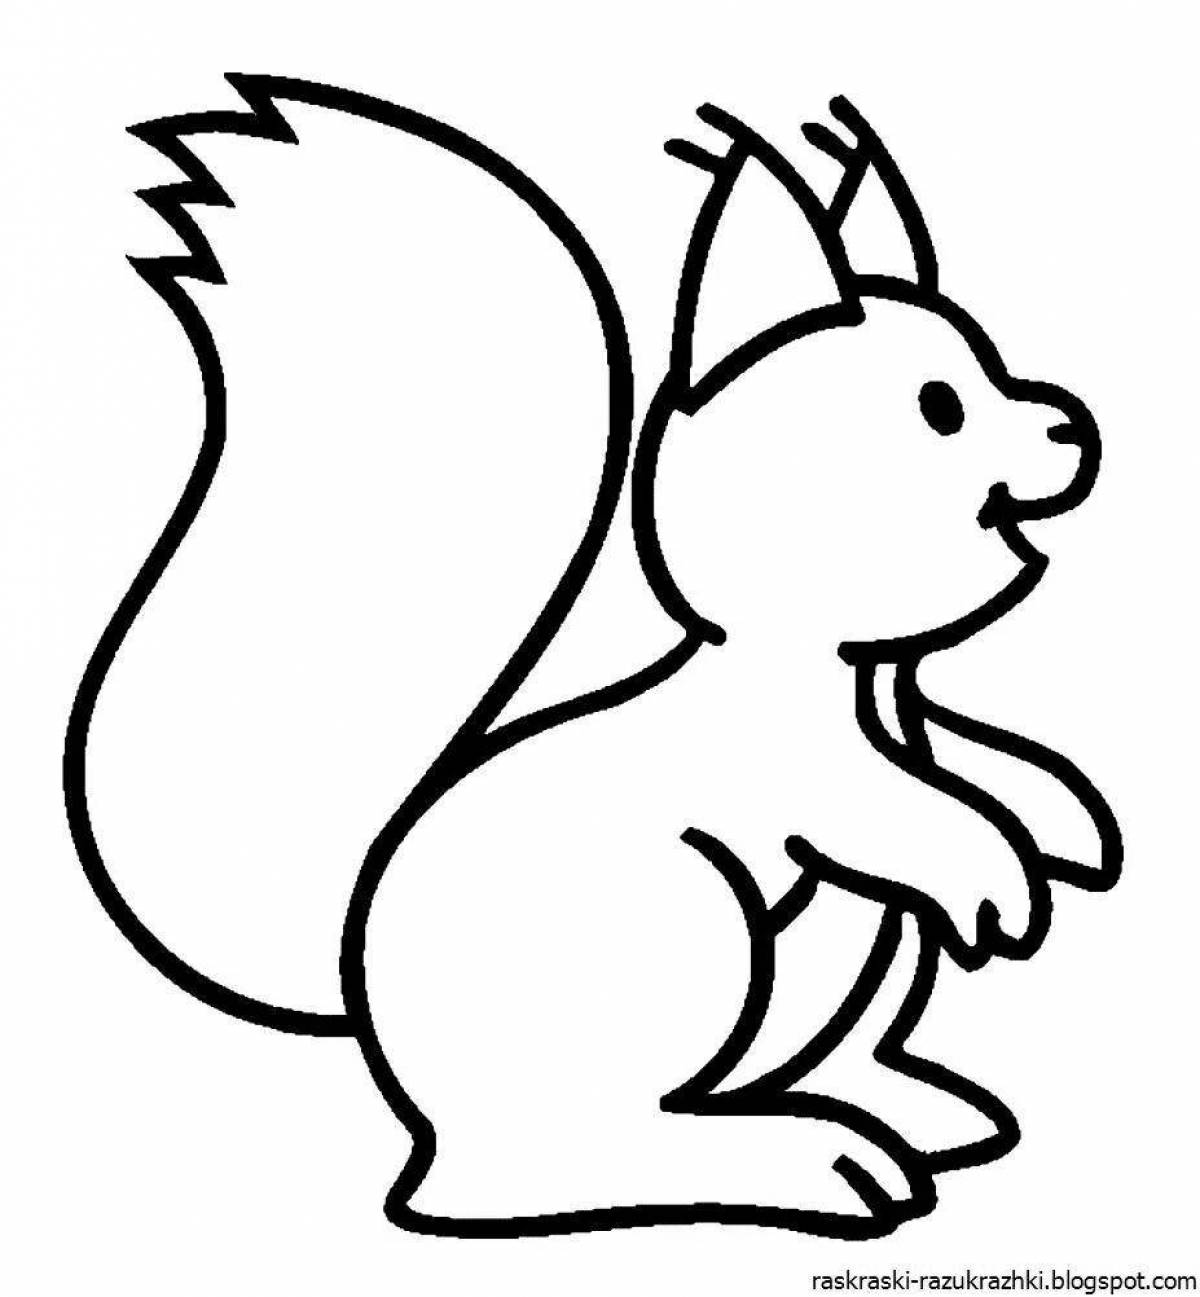 Squirrel fun coloring image